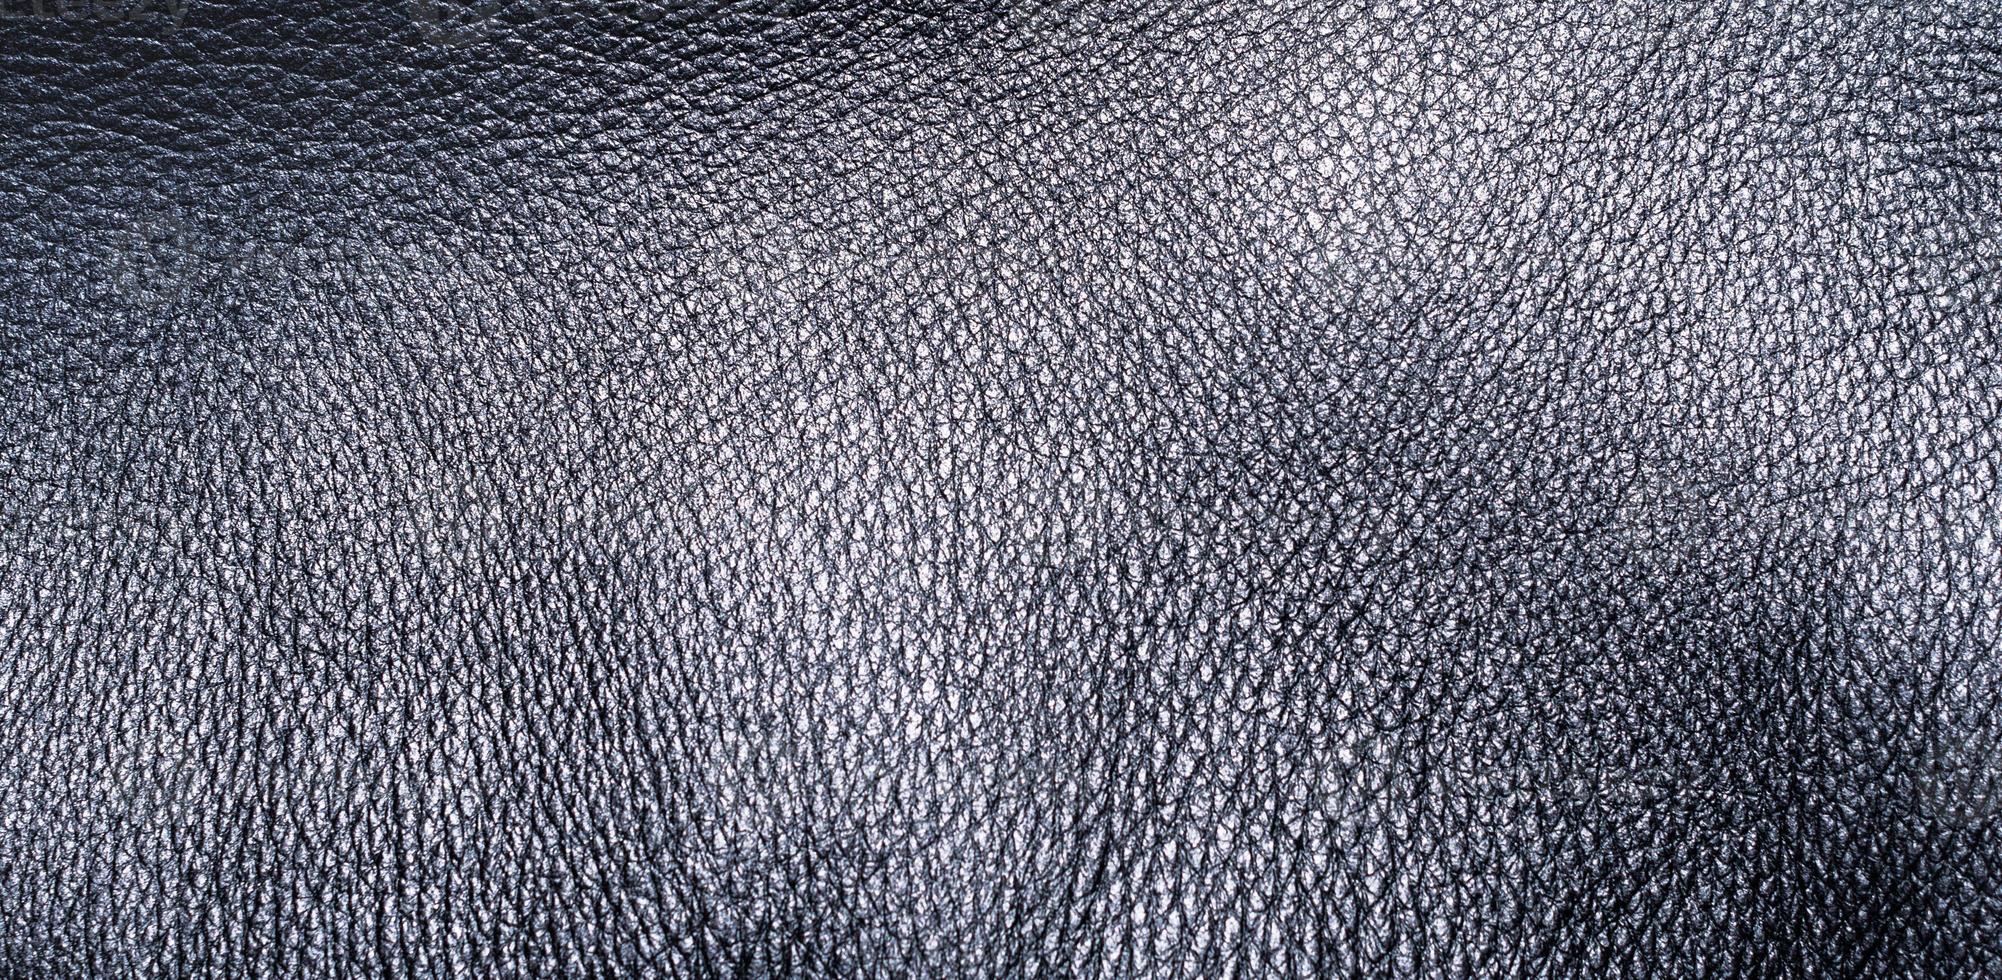 texture cuir naturel noir photo